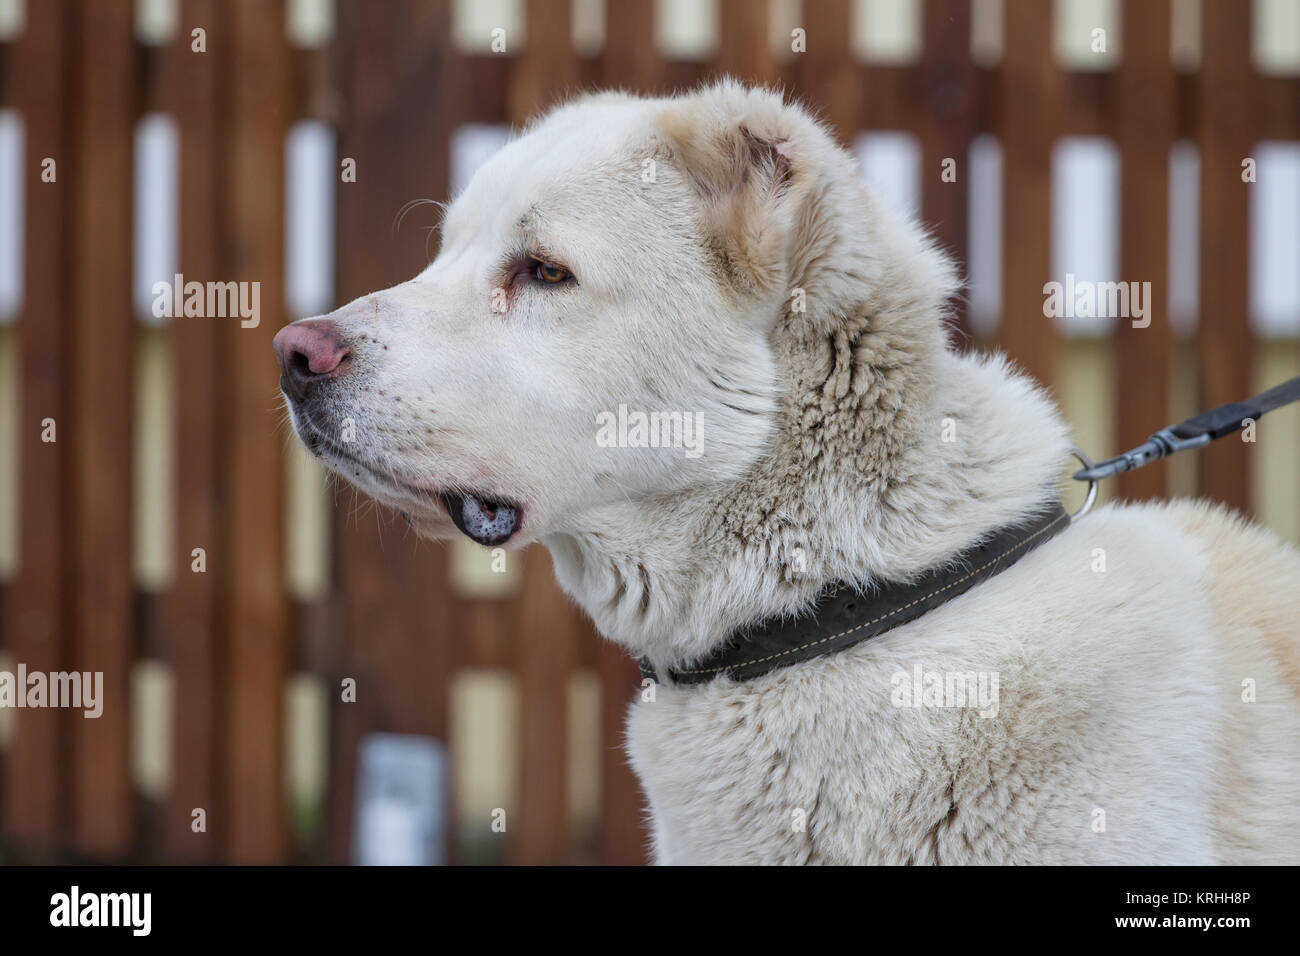 Central Asian Shepherd dog Stock Photo